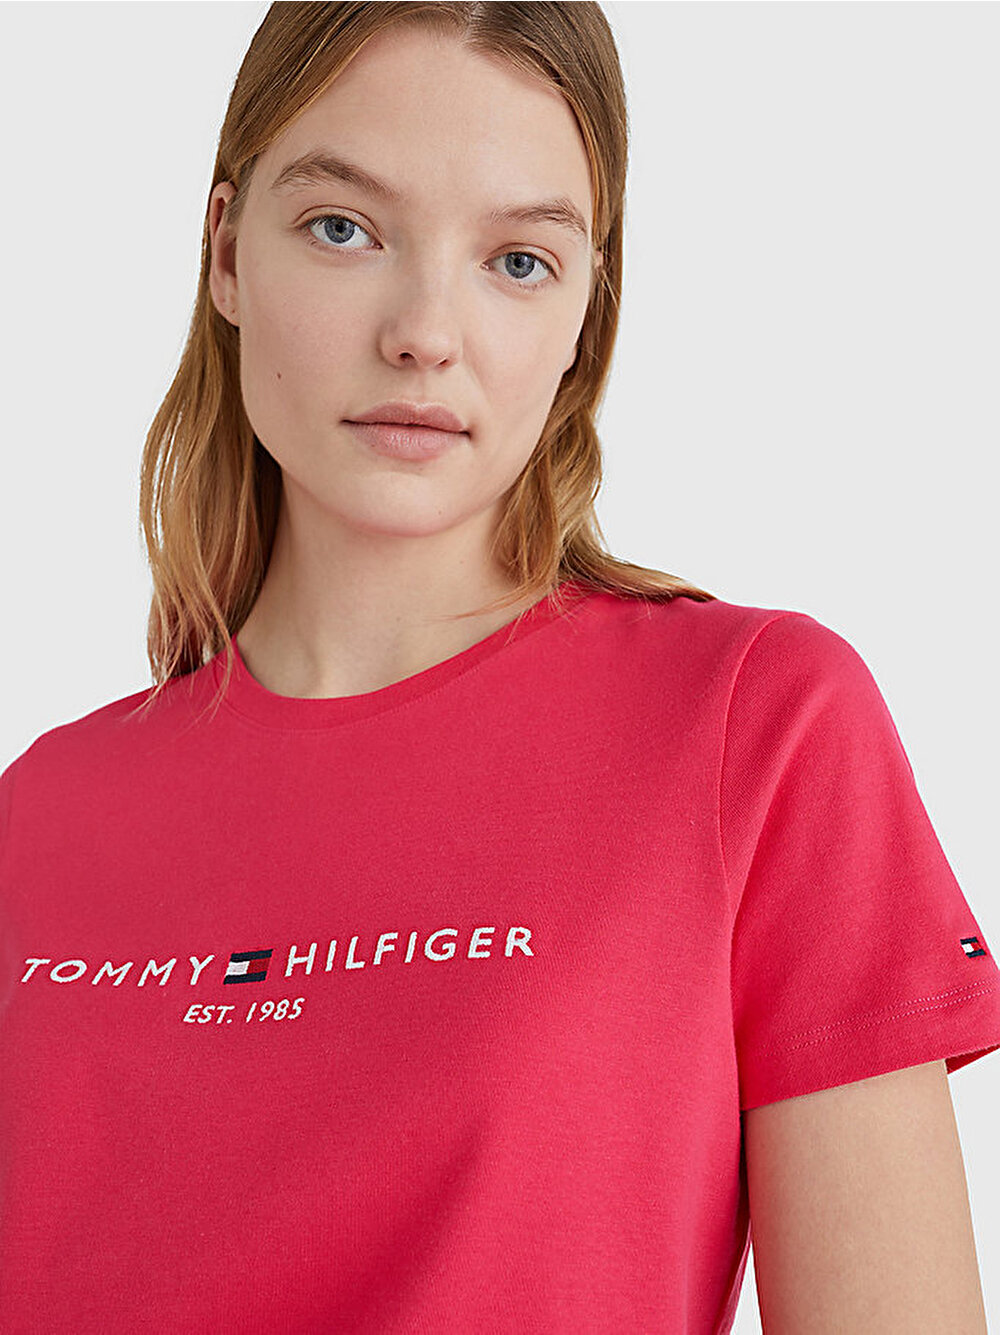 discount 80% Tommy Hilfiger polo WOMEN FASHION Shirts & T-shirts Polo Print Red/White XL 